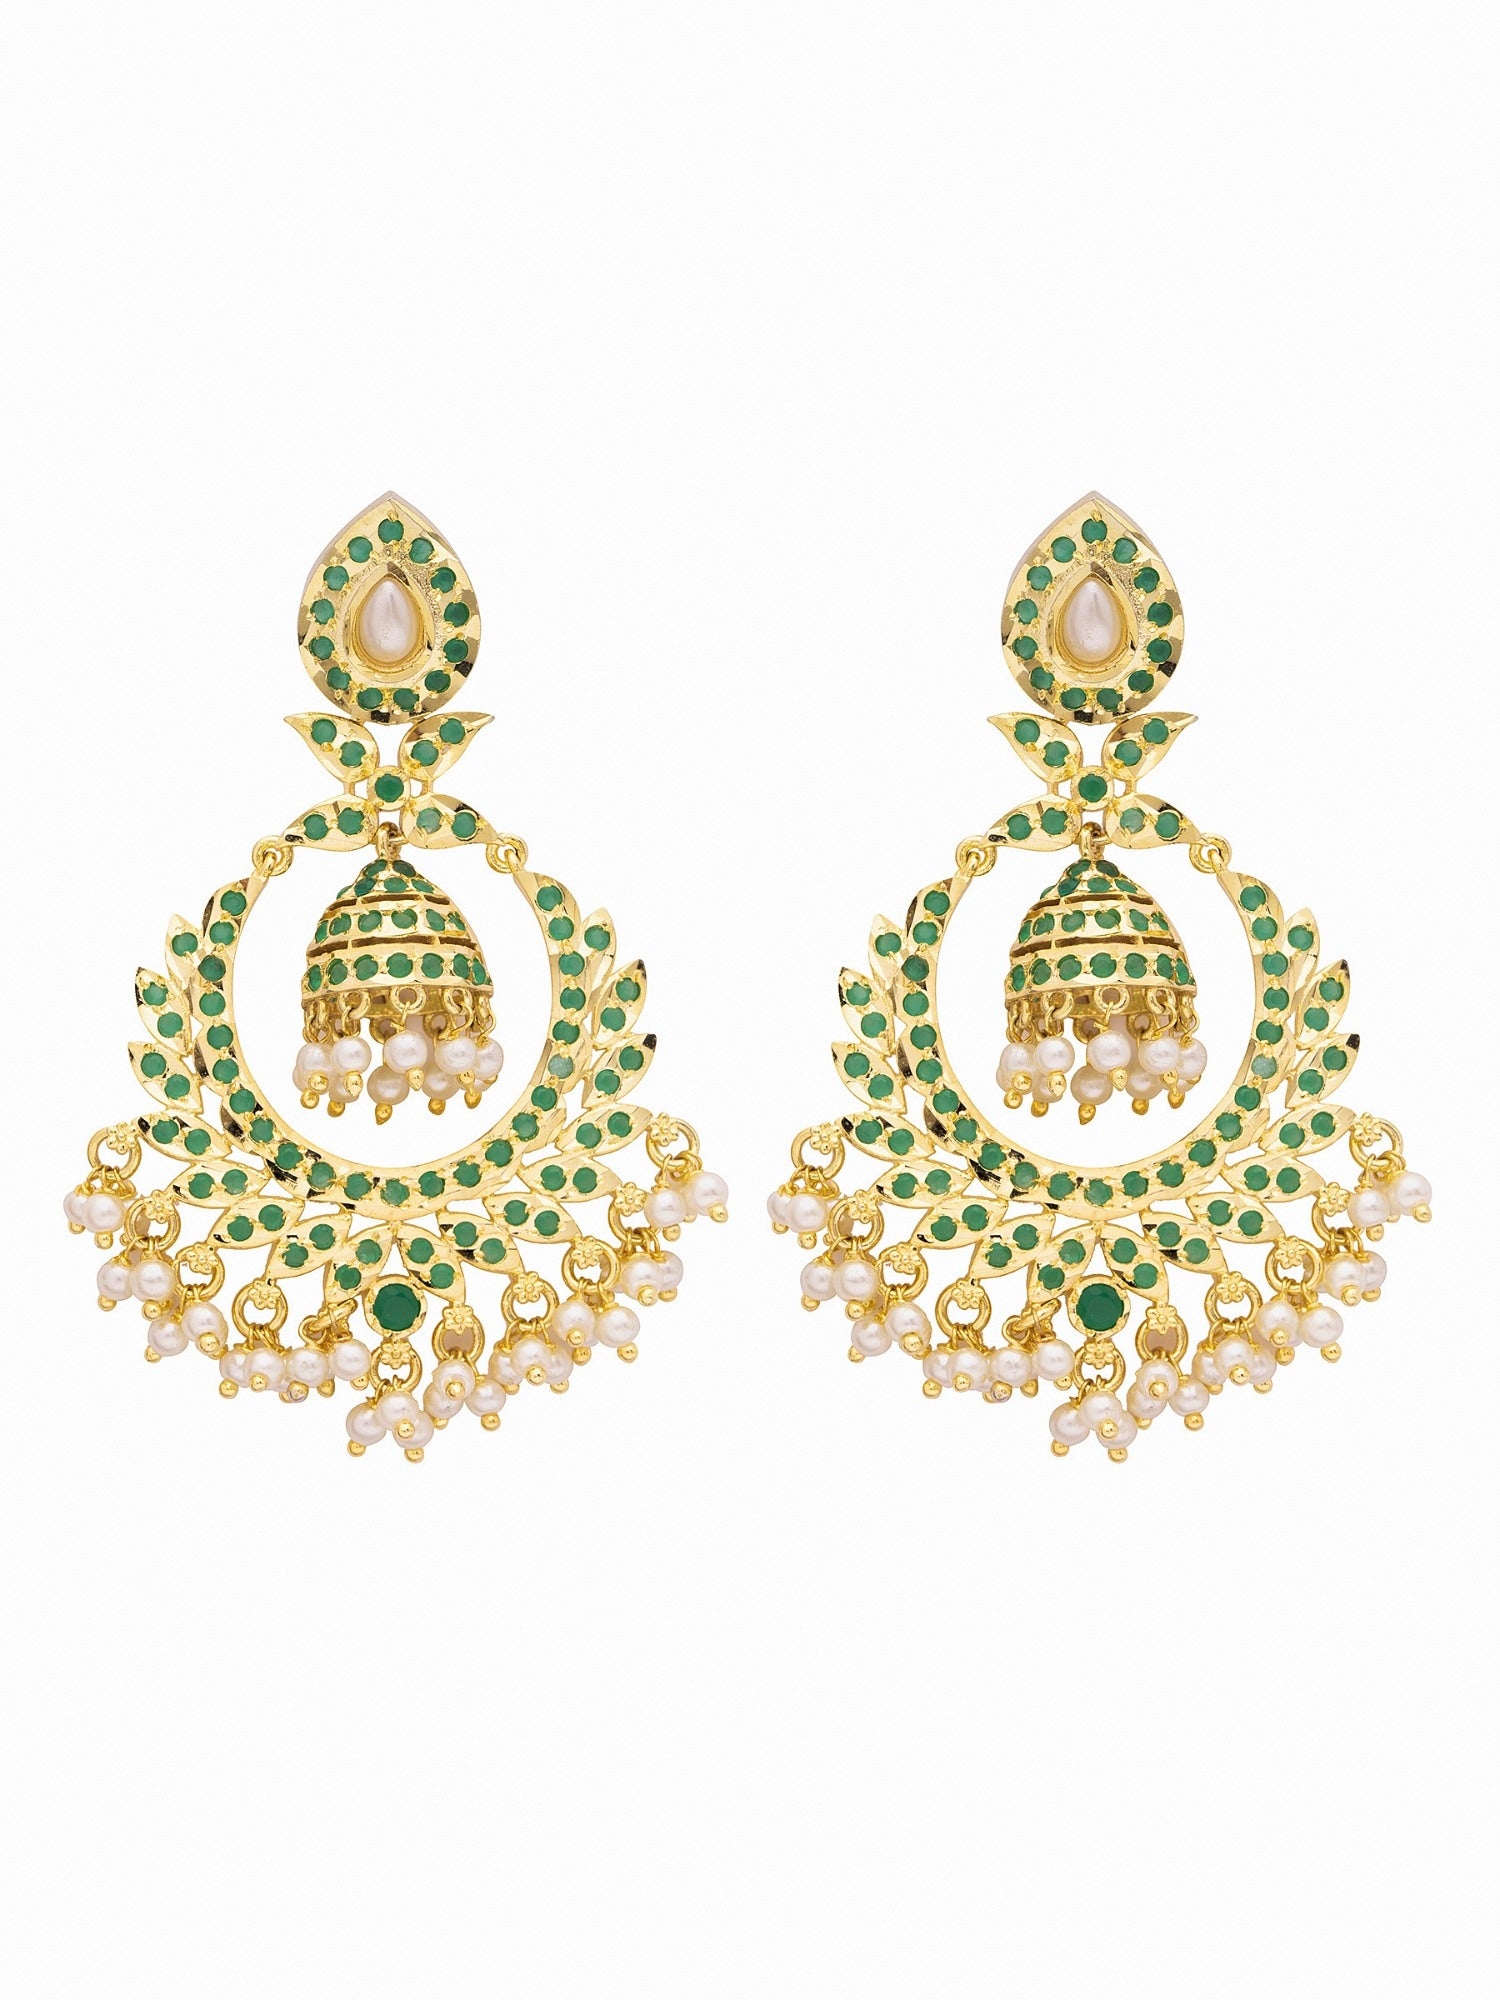 Gold Plated Long Kundan Chandbali Earrings with Green Crystal stones 